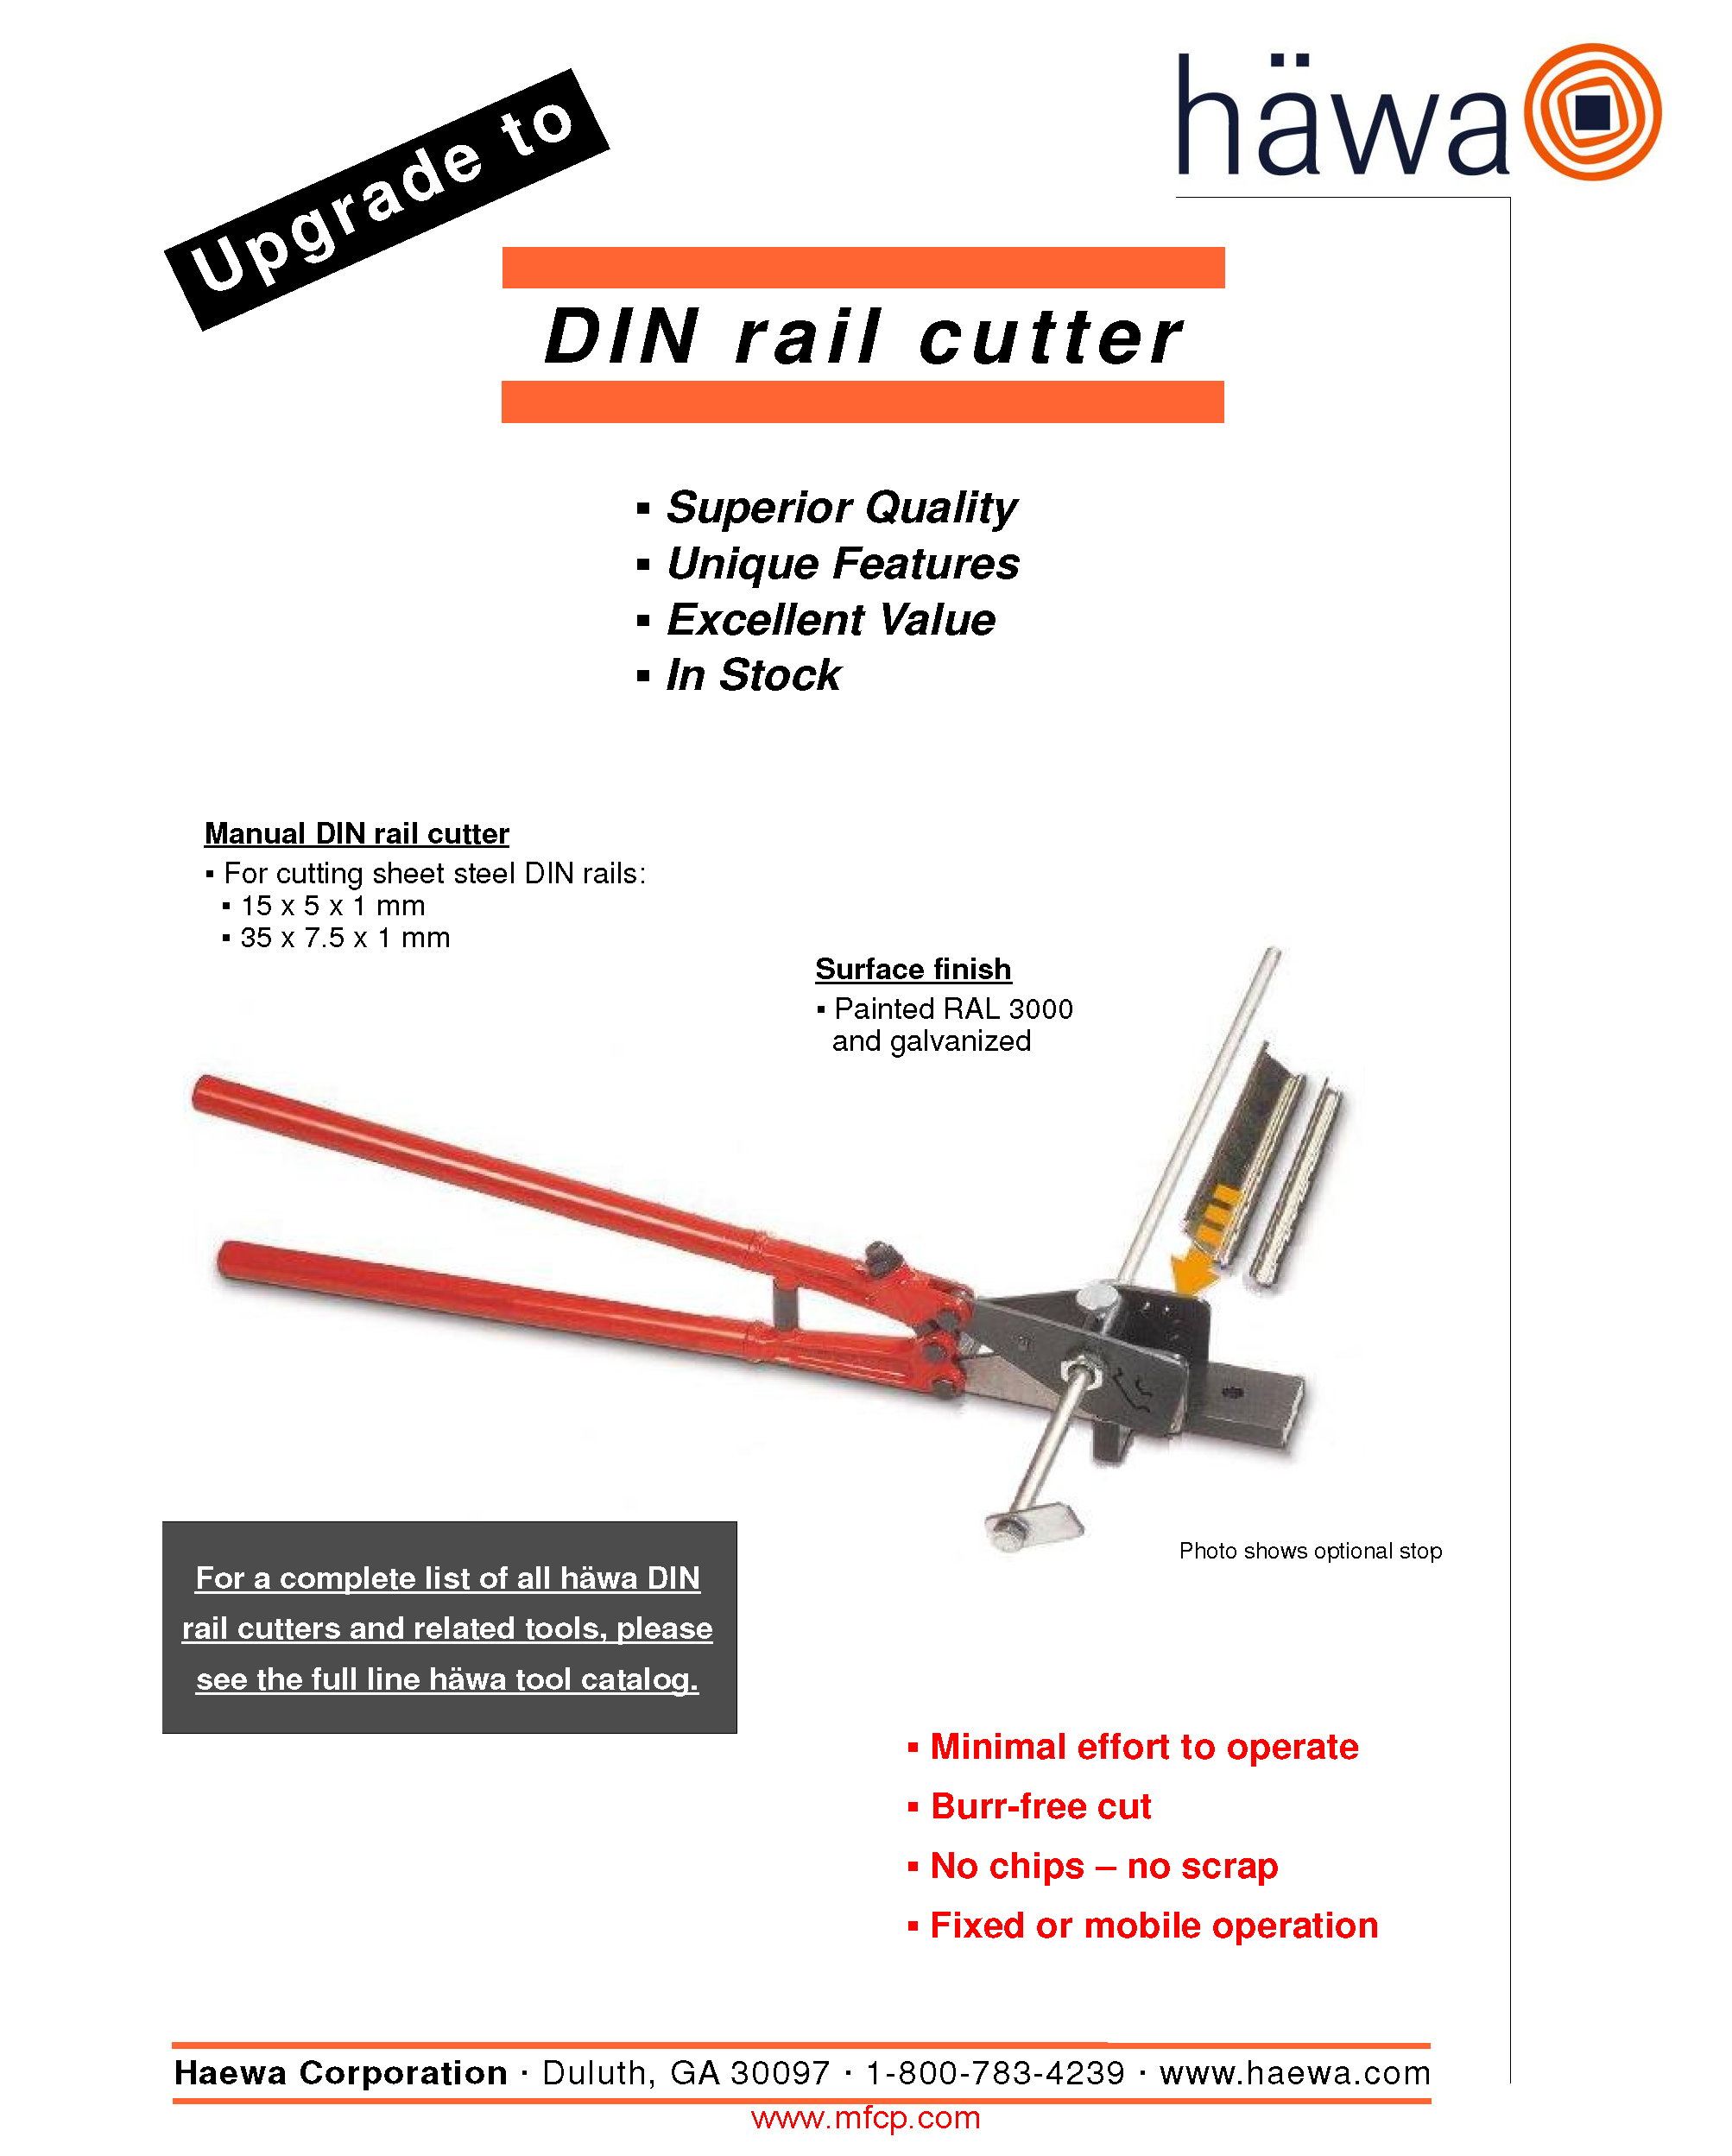 Haewa-DIN-rail-cutter-1009